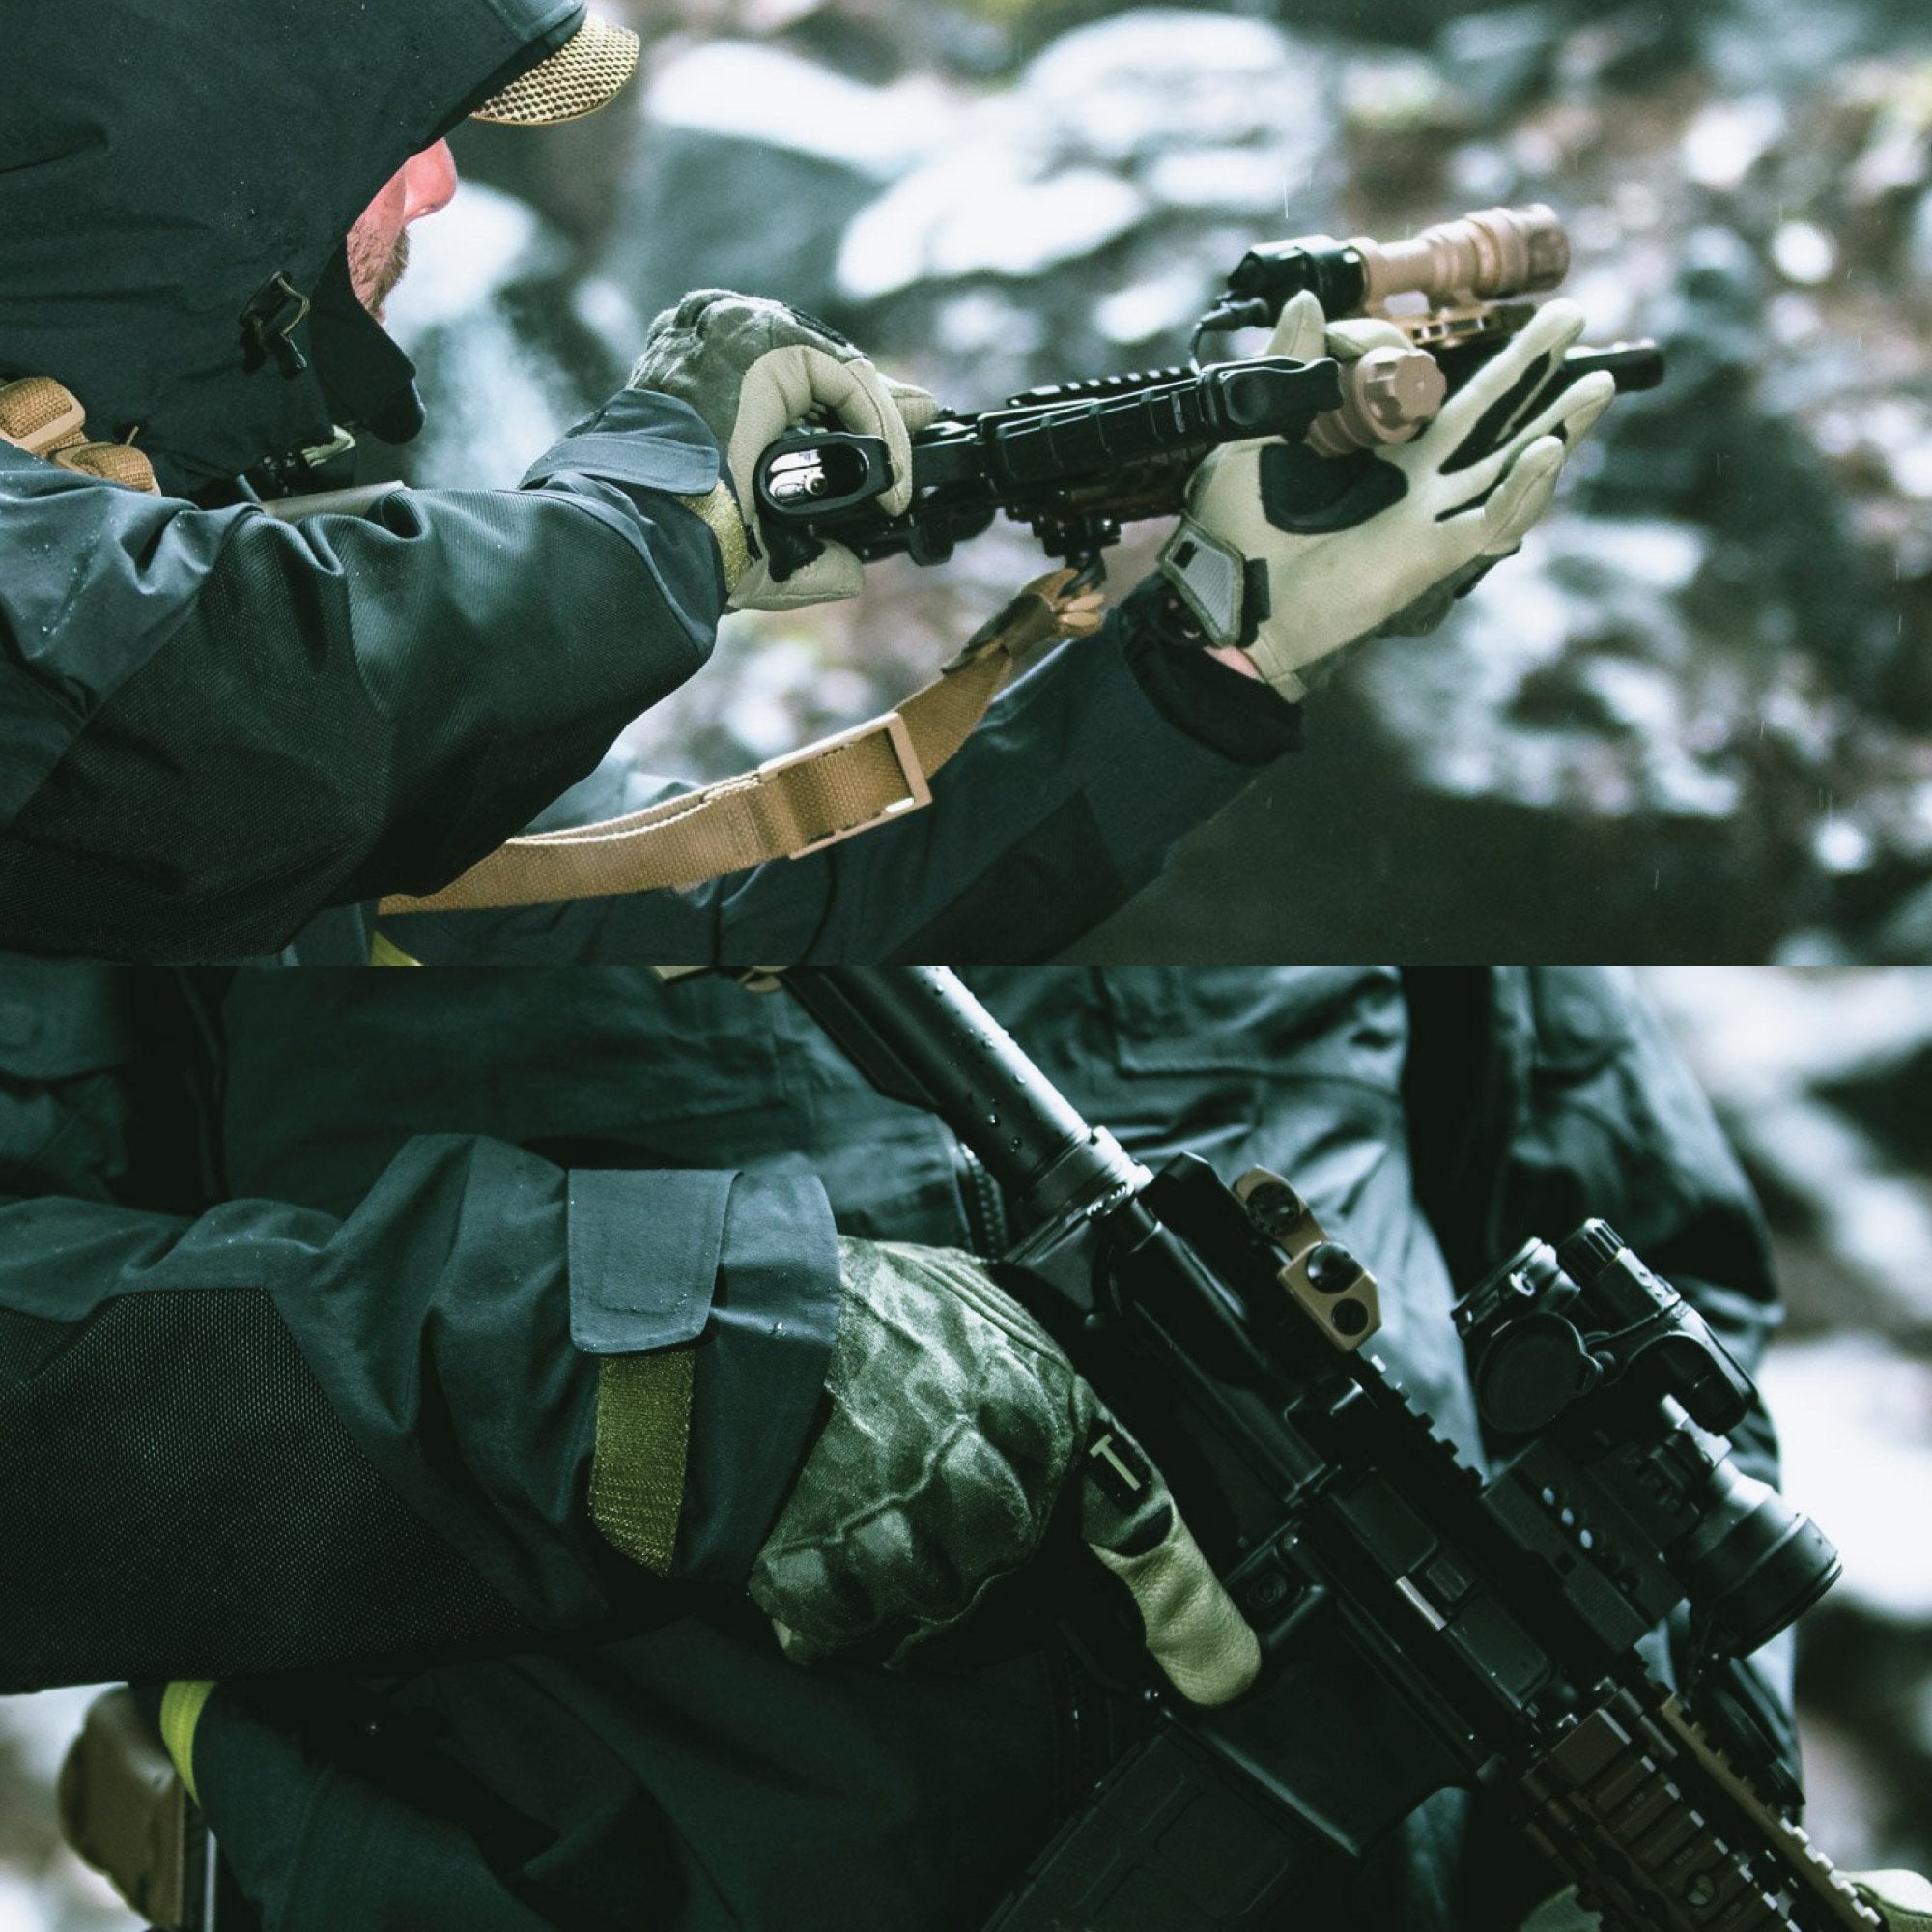 VIKTOS Shortshot Gloves Spartan Gloves VIKTOS Tactical Gear Supplier Tactical Distributors Australia